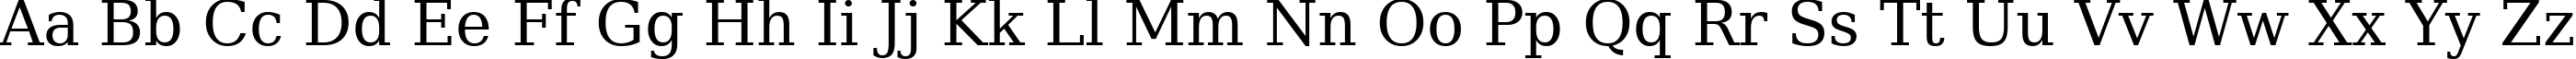 Пример написания английского алфавита шрифтом ae_Nagham